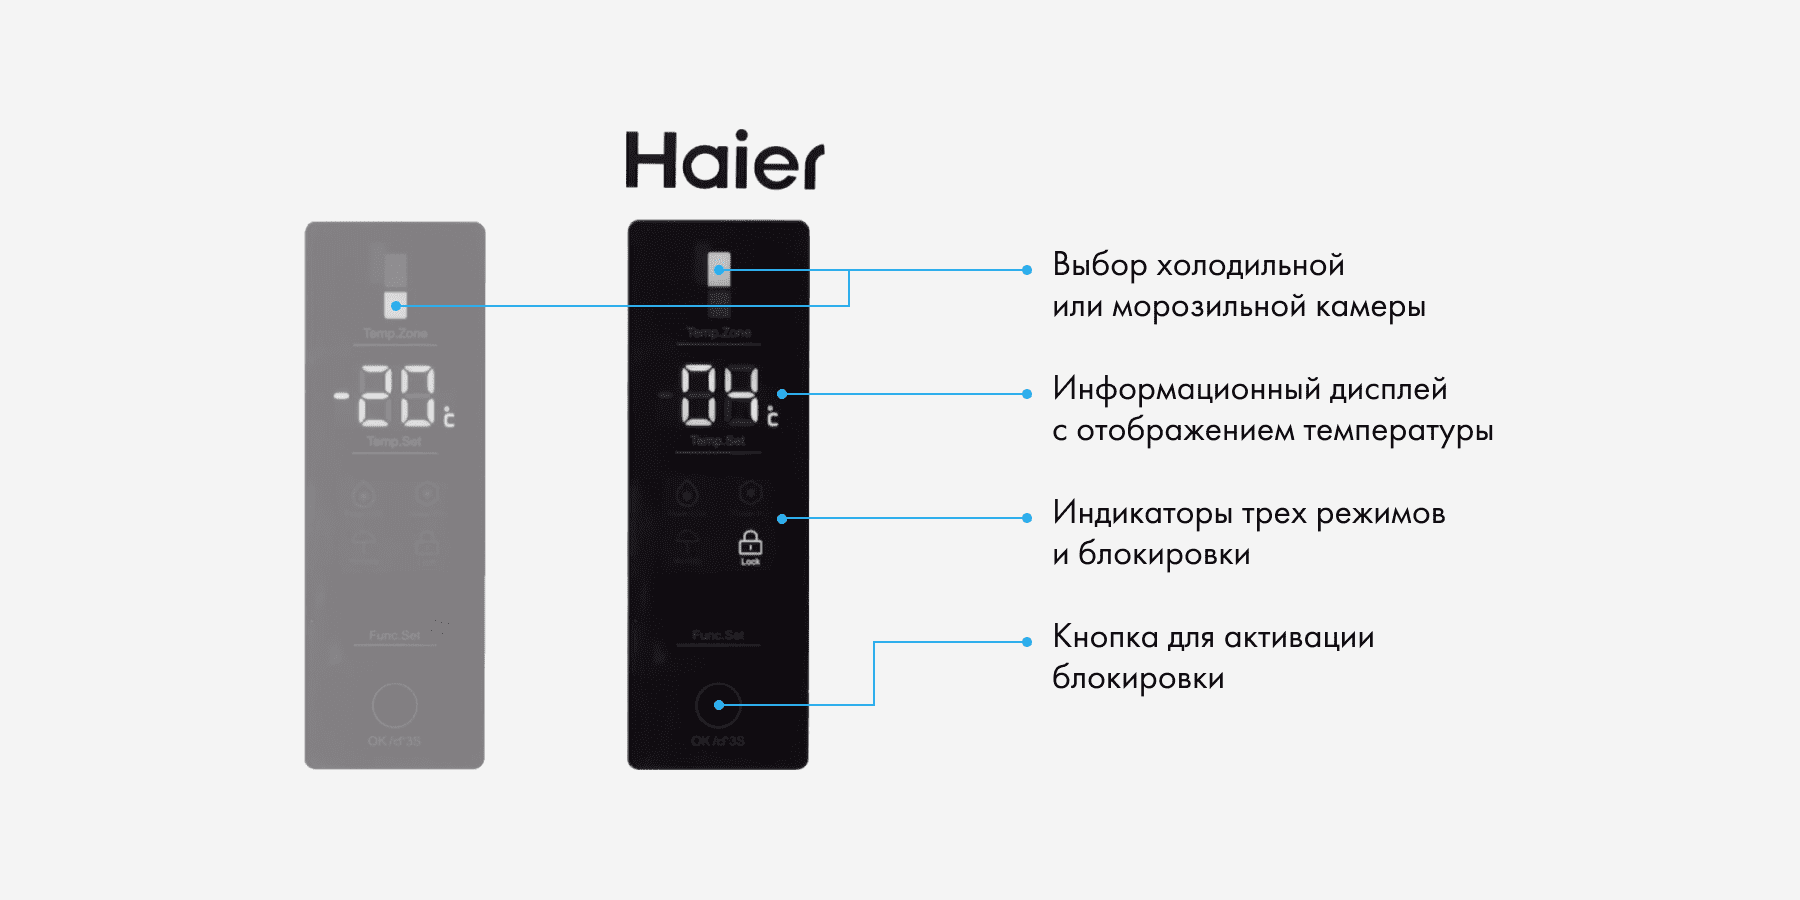 Холодильник Haier cef535asg. Холодильник Хаер как настроить температуру. Холодильник Haier как выставить температуру. Как настроить холодильник Хайер на дисплее температуру.